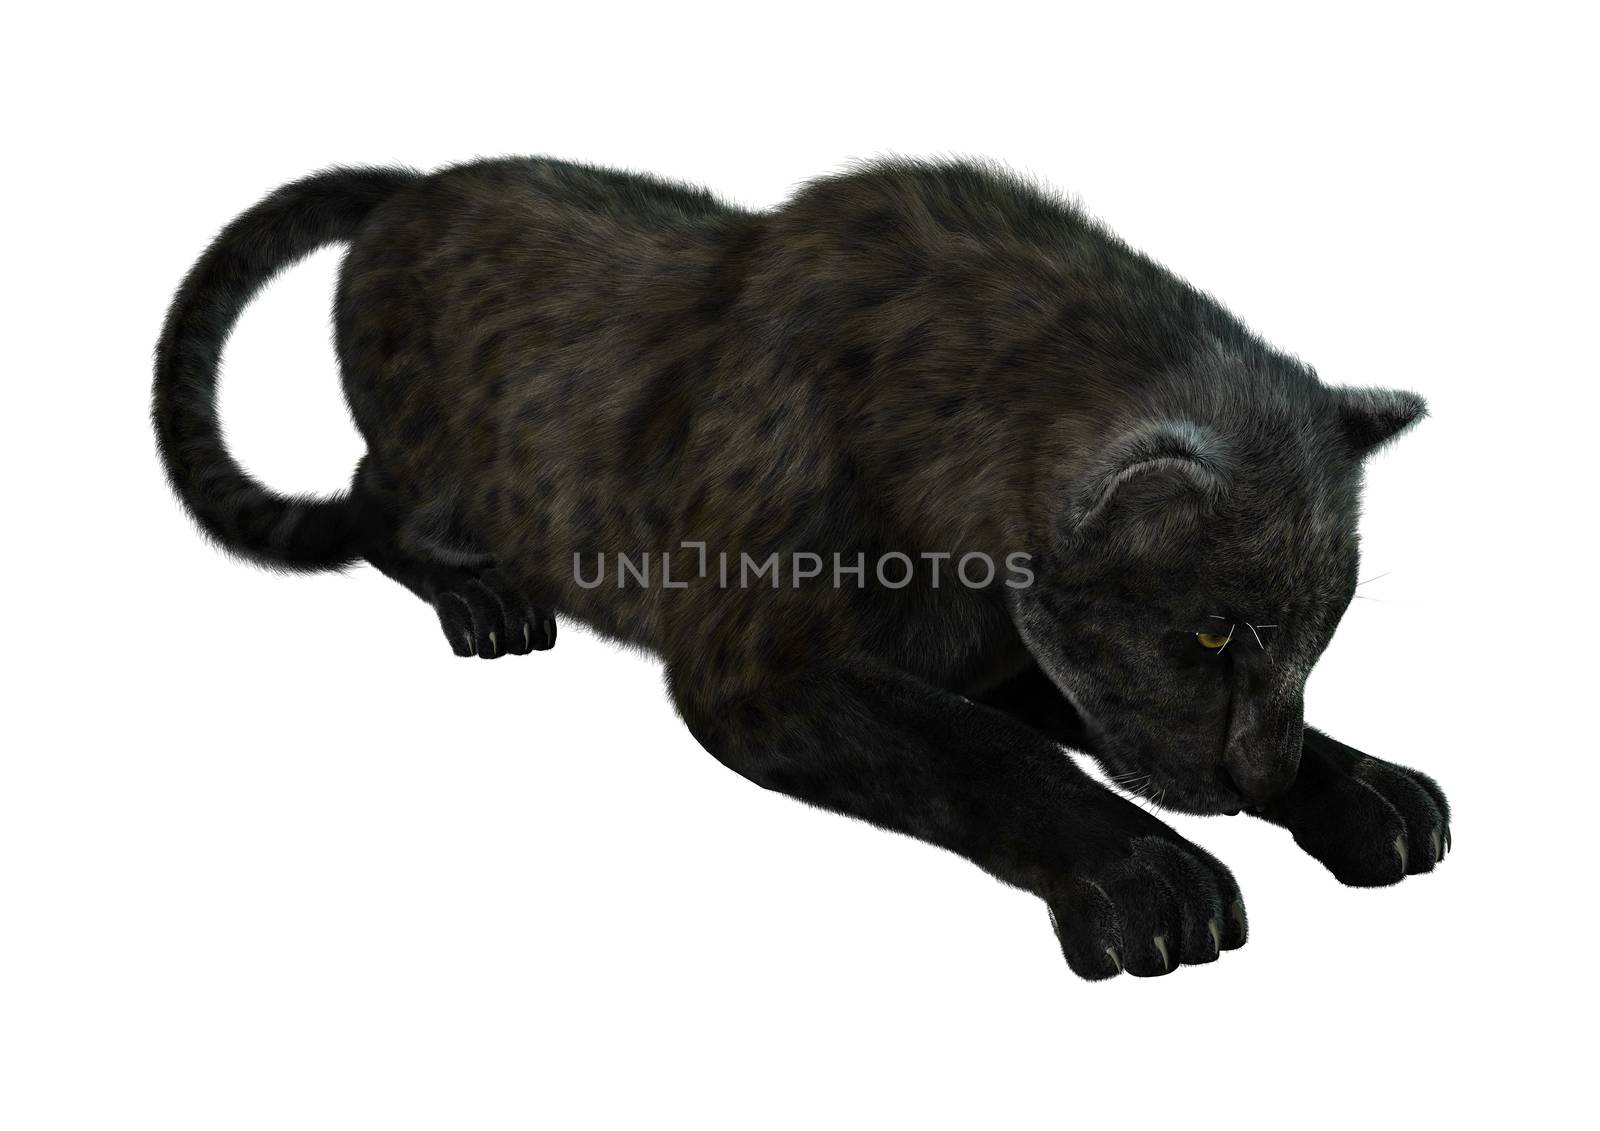 Big Cat Black Panther by Vac